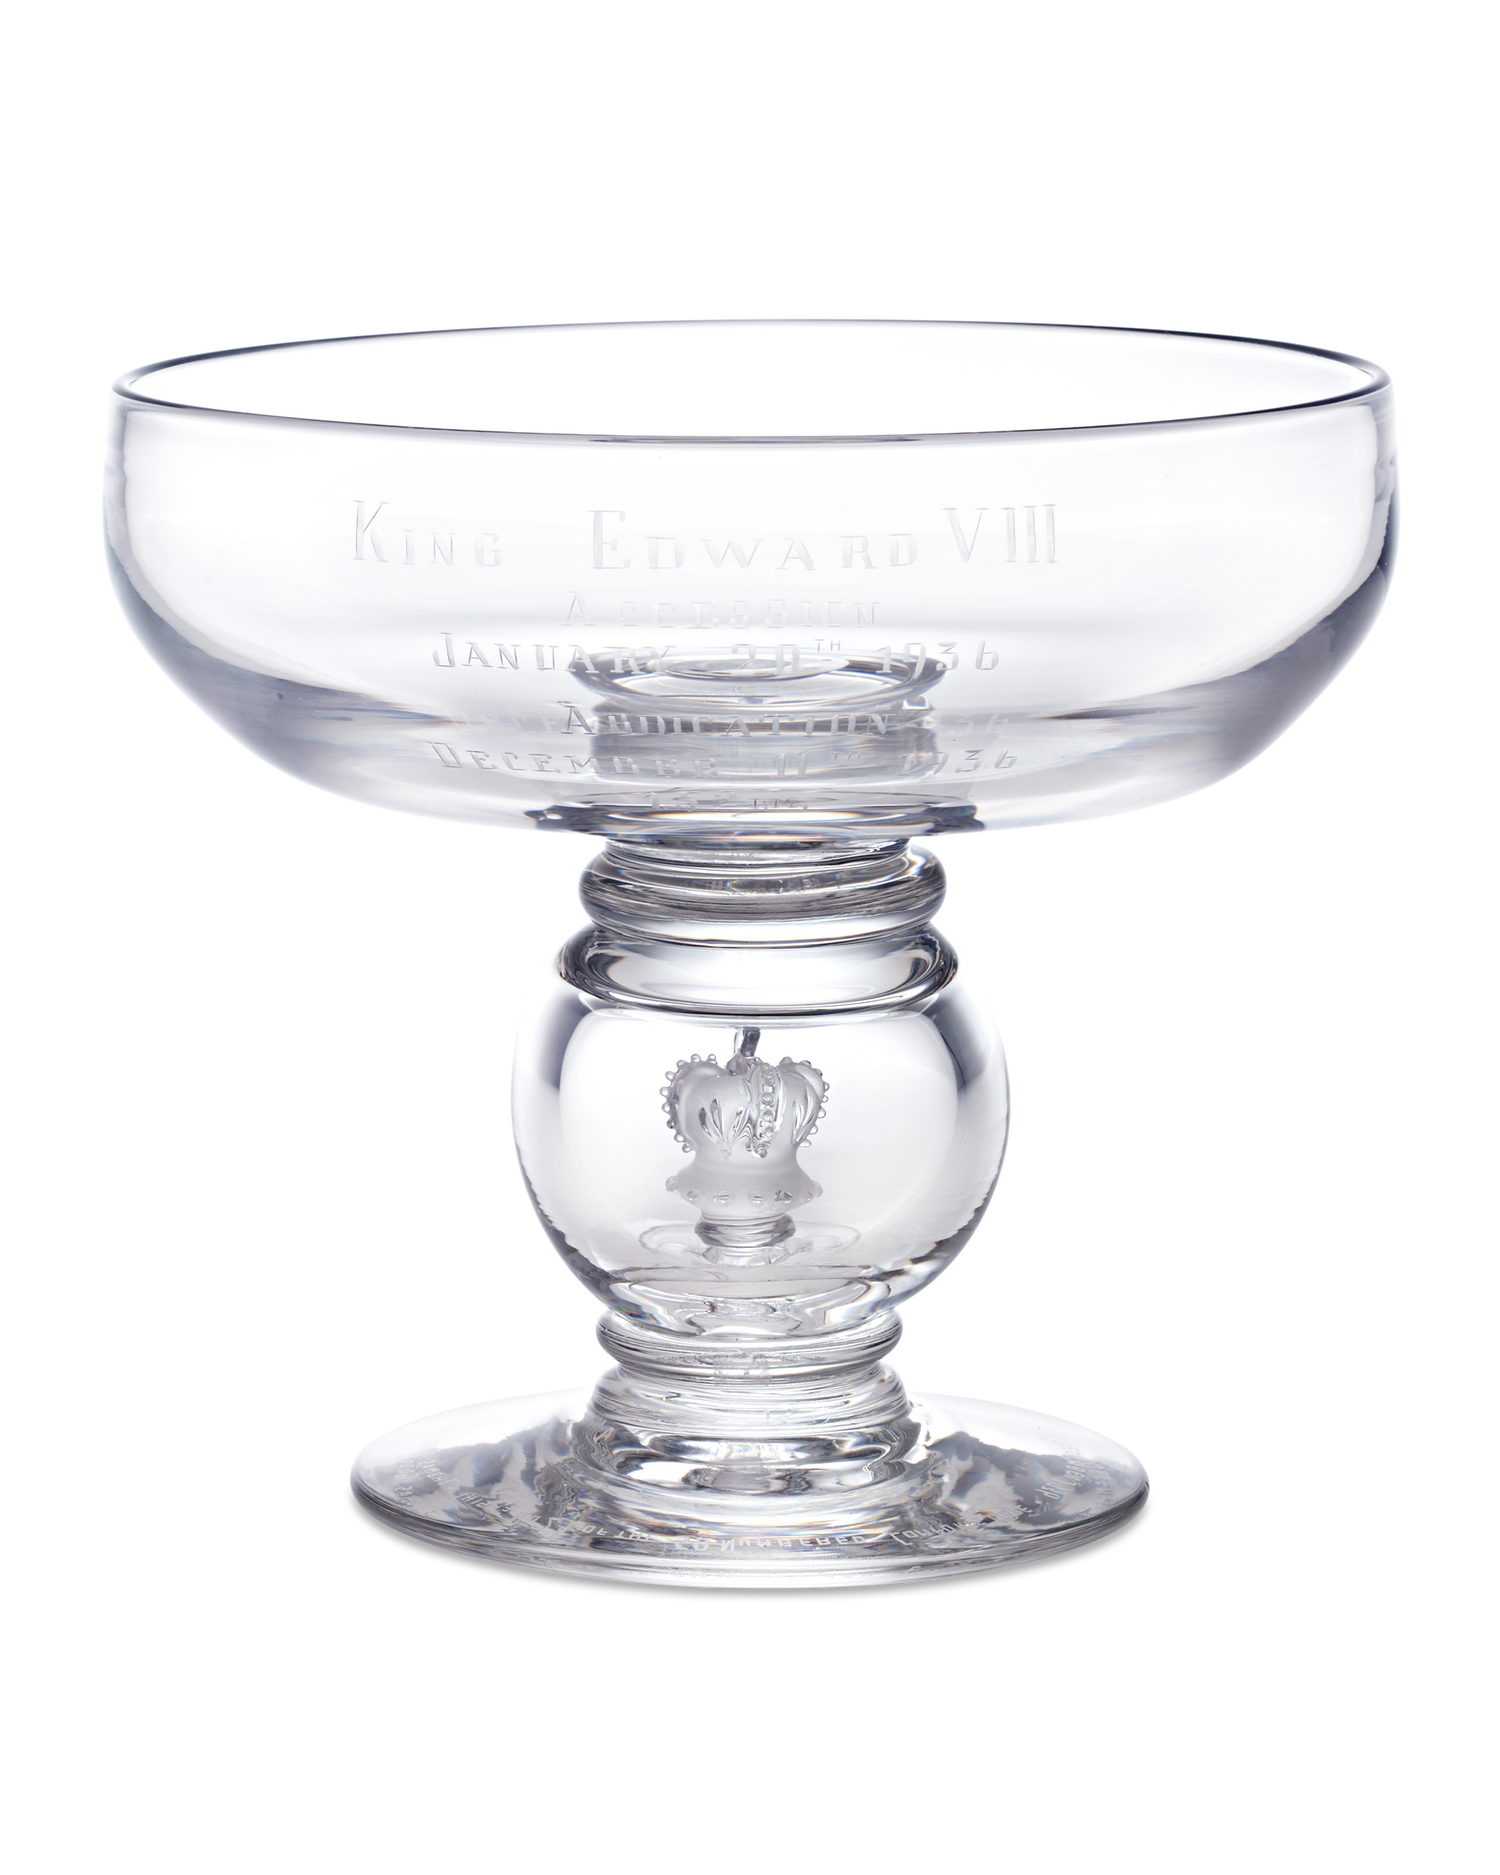 King Edward VIII Commemorative Abdication Cup